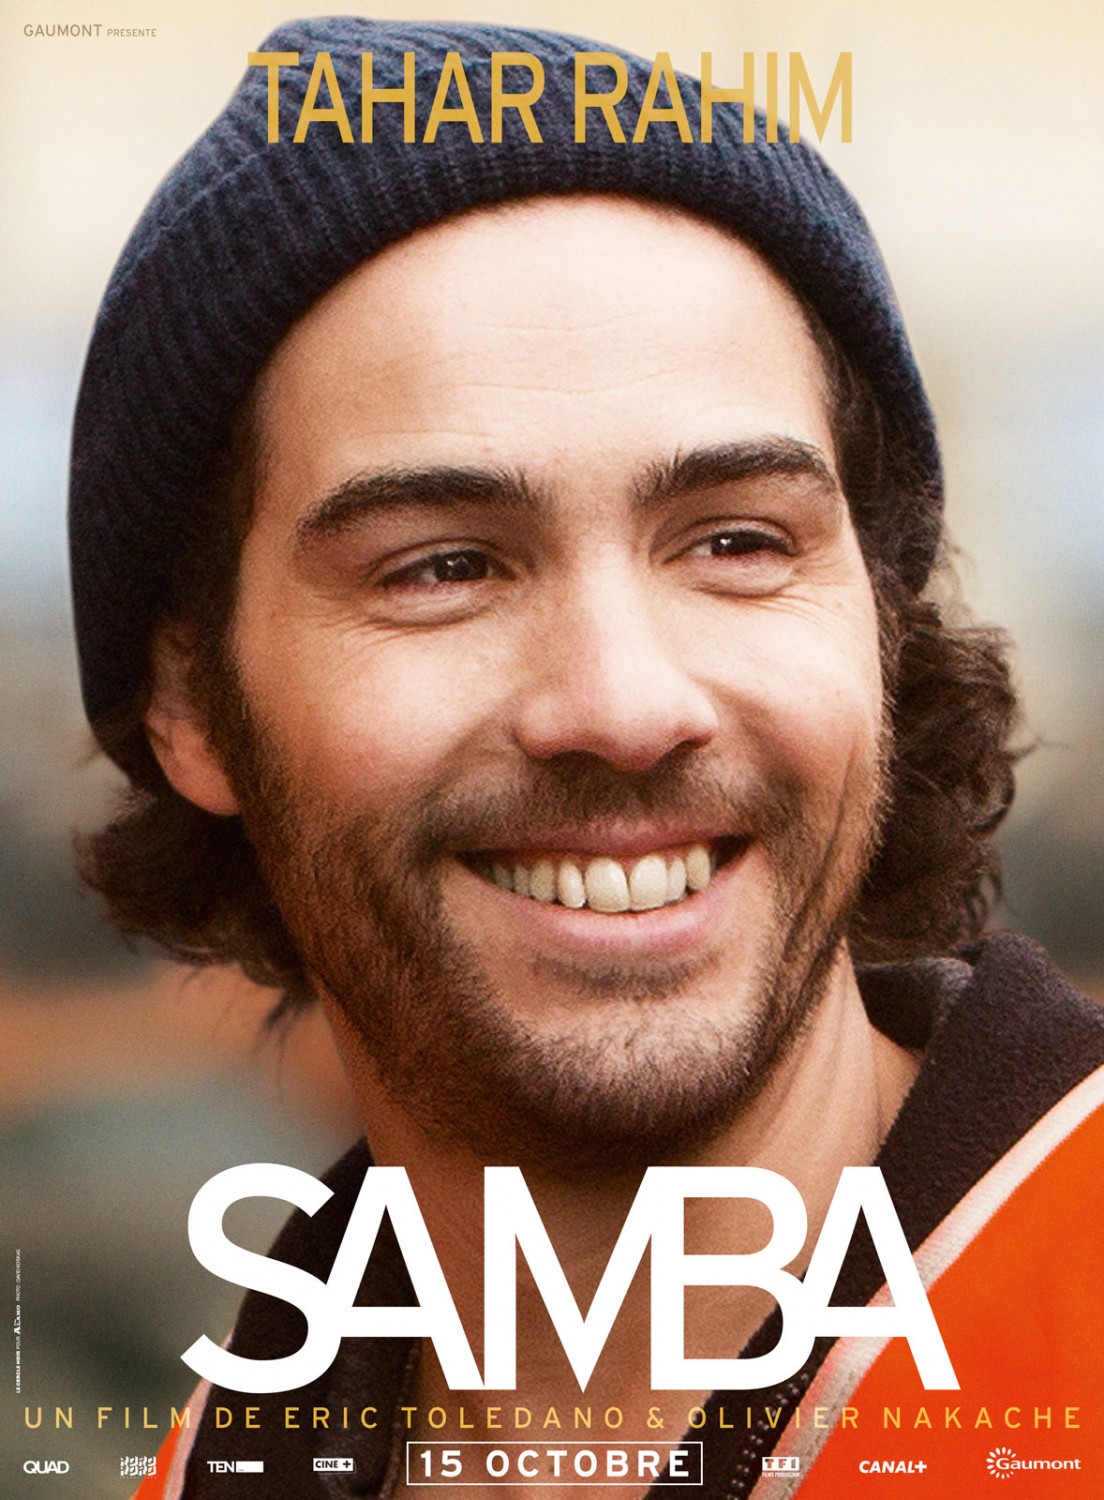 Extra Large Movie Poster Image for Samba (#3 of 8)